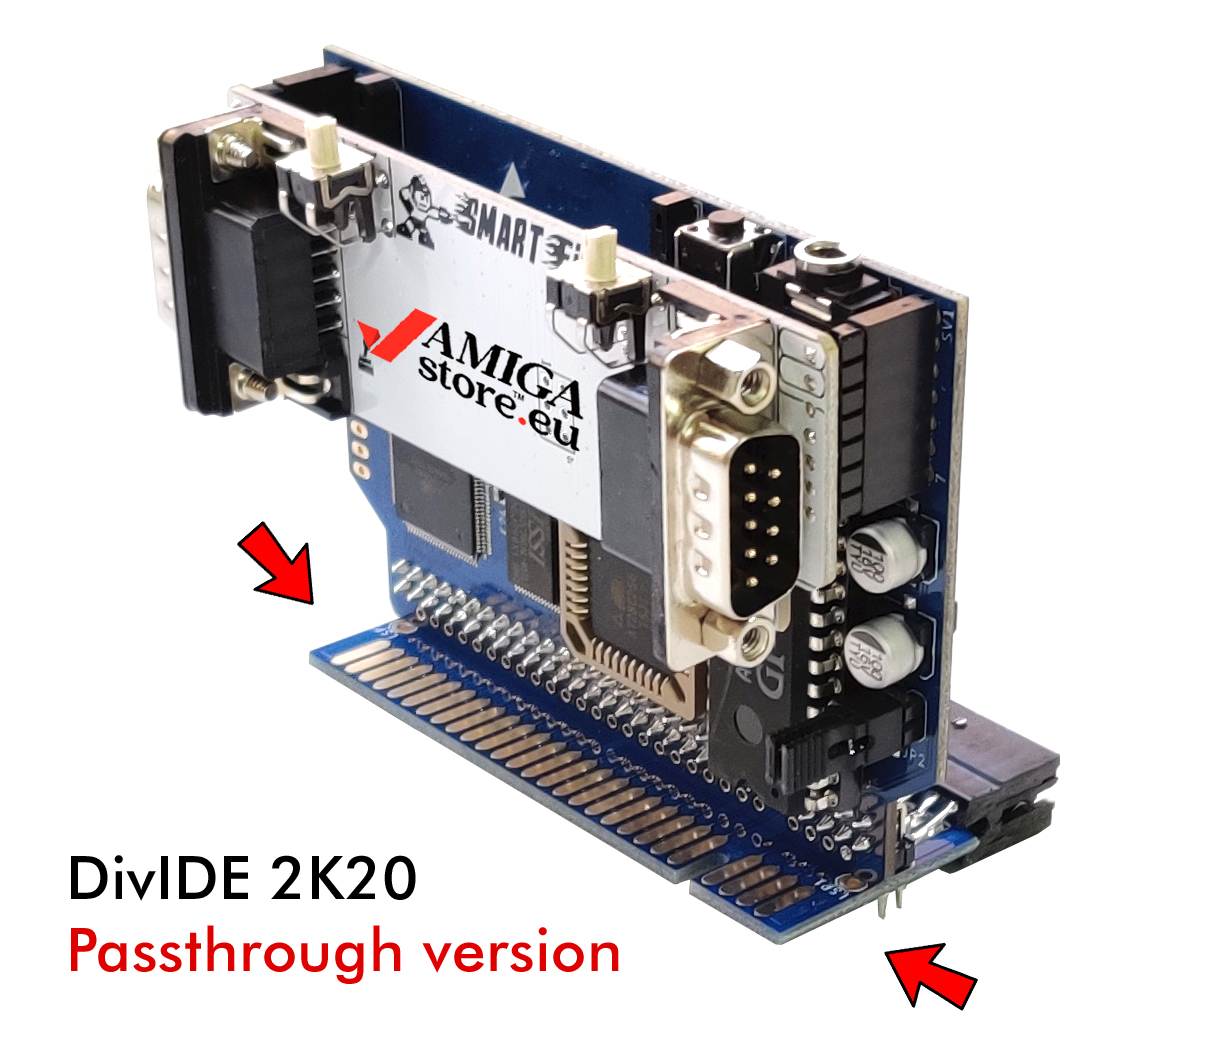 DivIDE 2k20 passthrough version